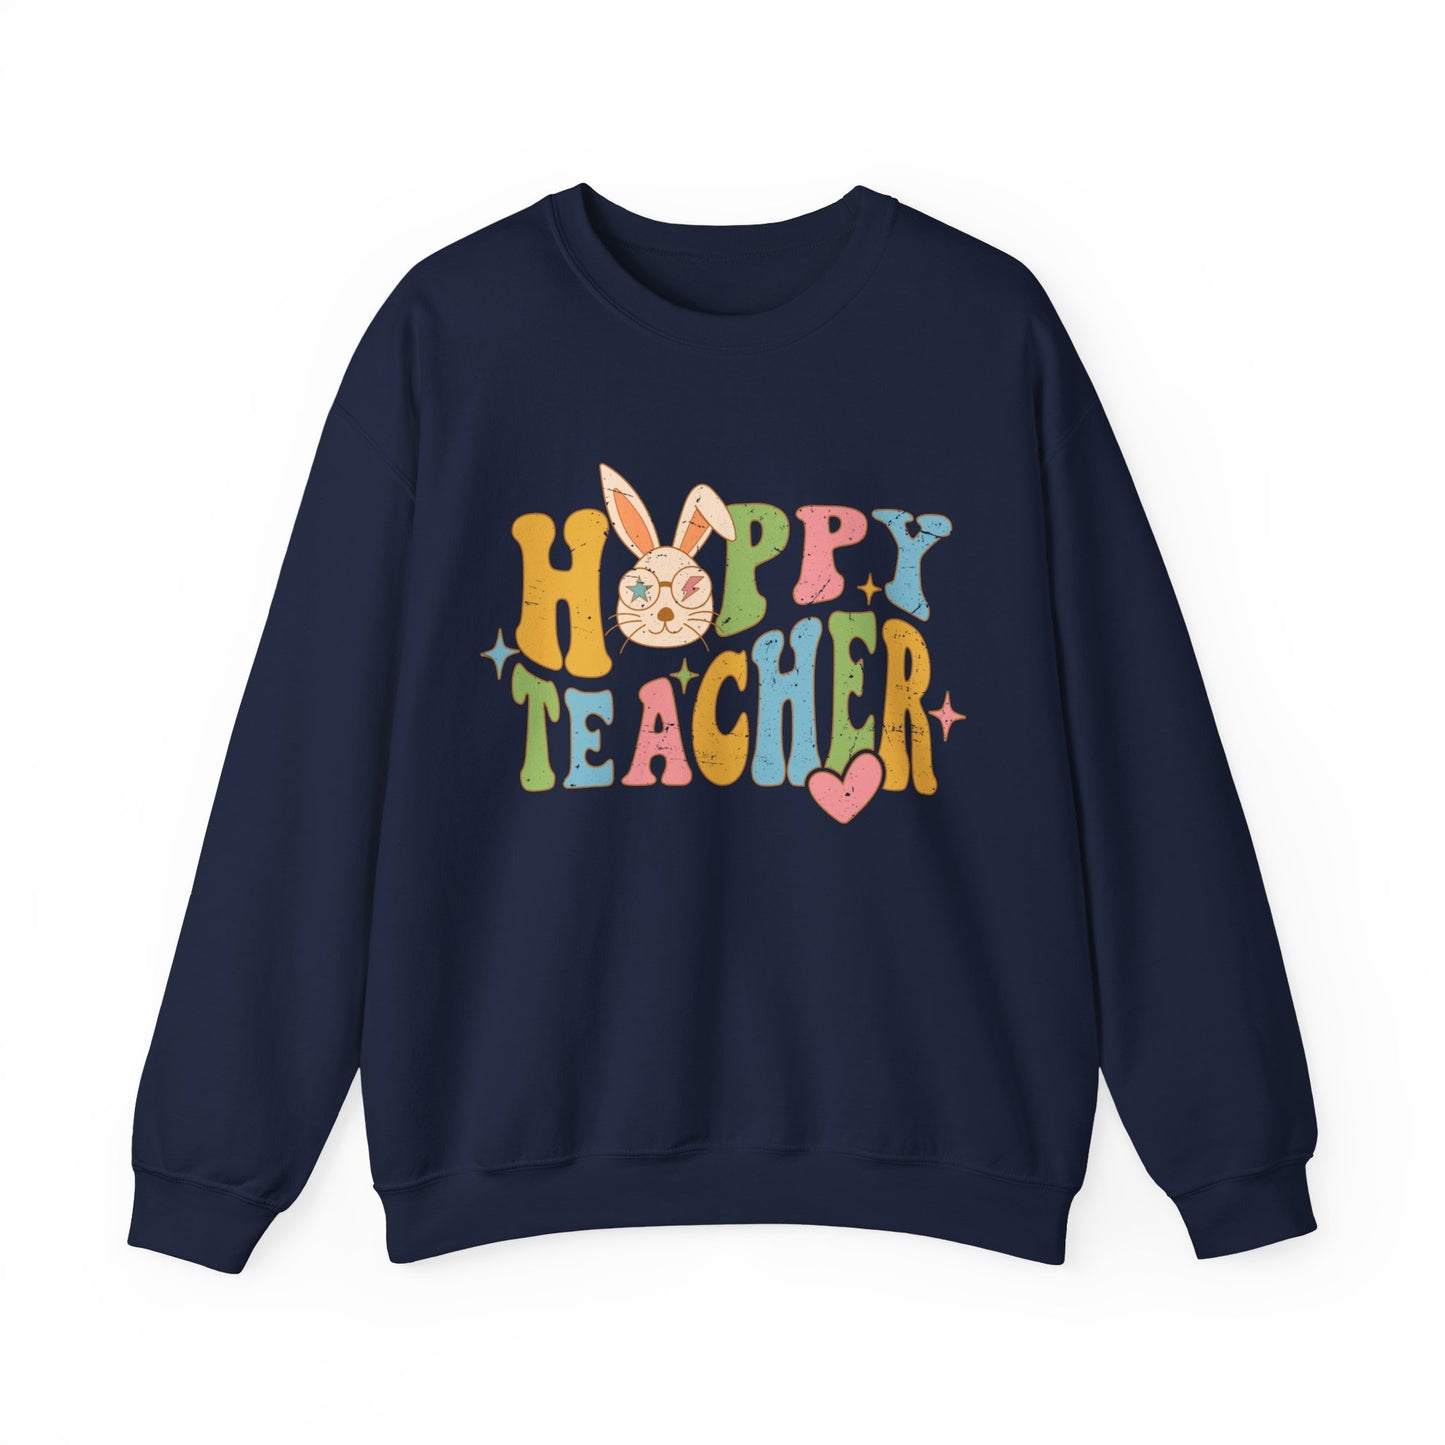 Happy Hoppy Teacher Women's Easter Sweatshirt